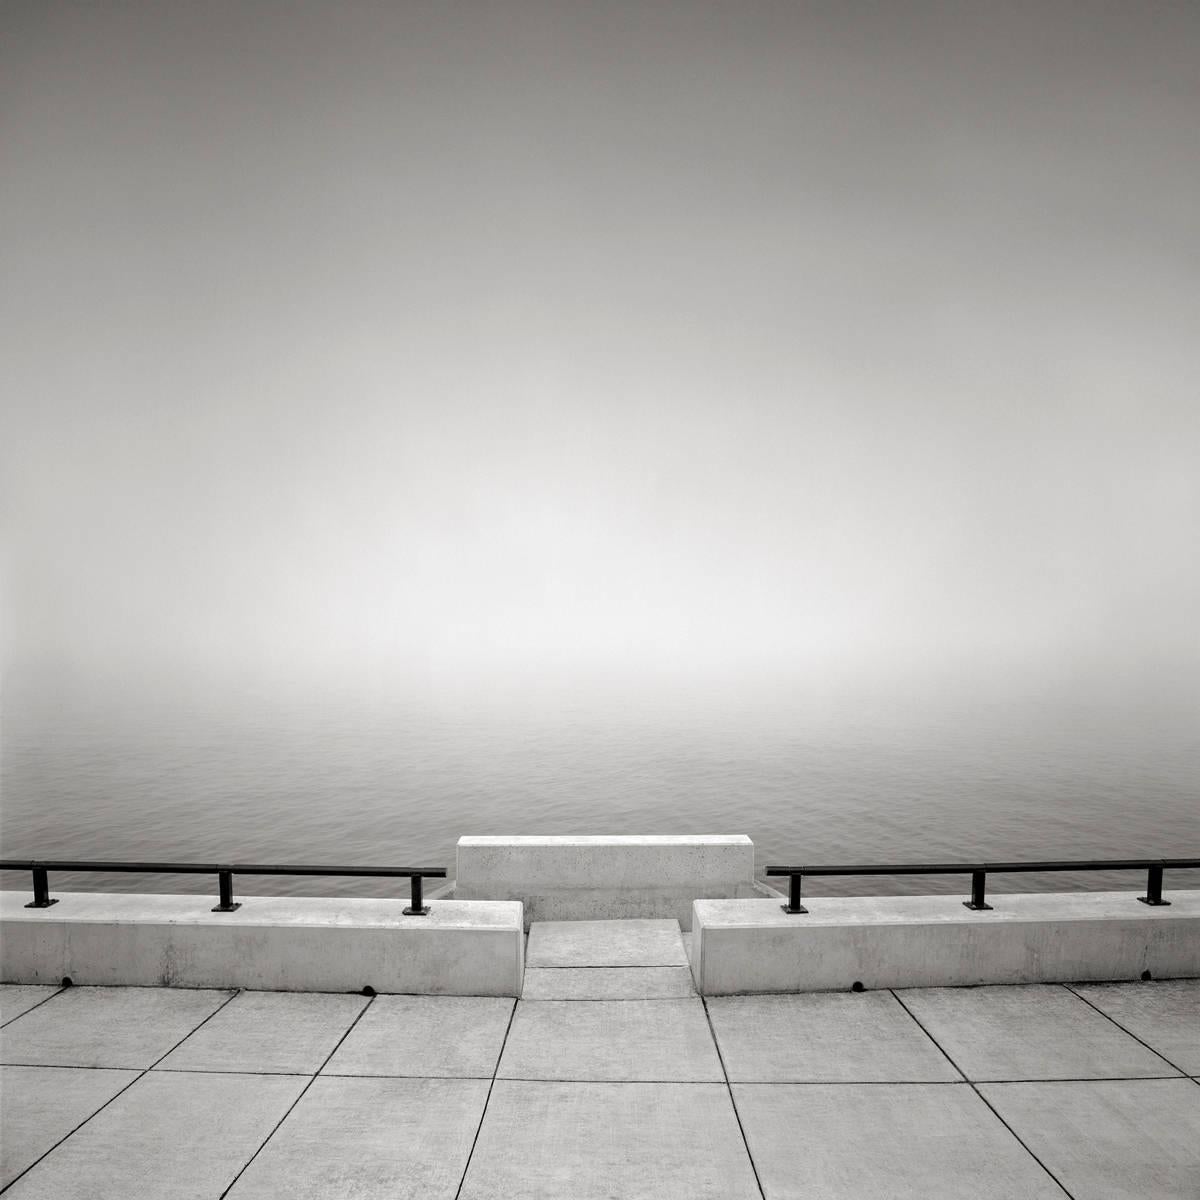 David Fokos Black and White Photograph - Hidden Steps, Lynn, Massachusetts, 1998